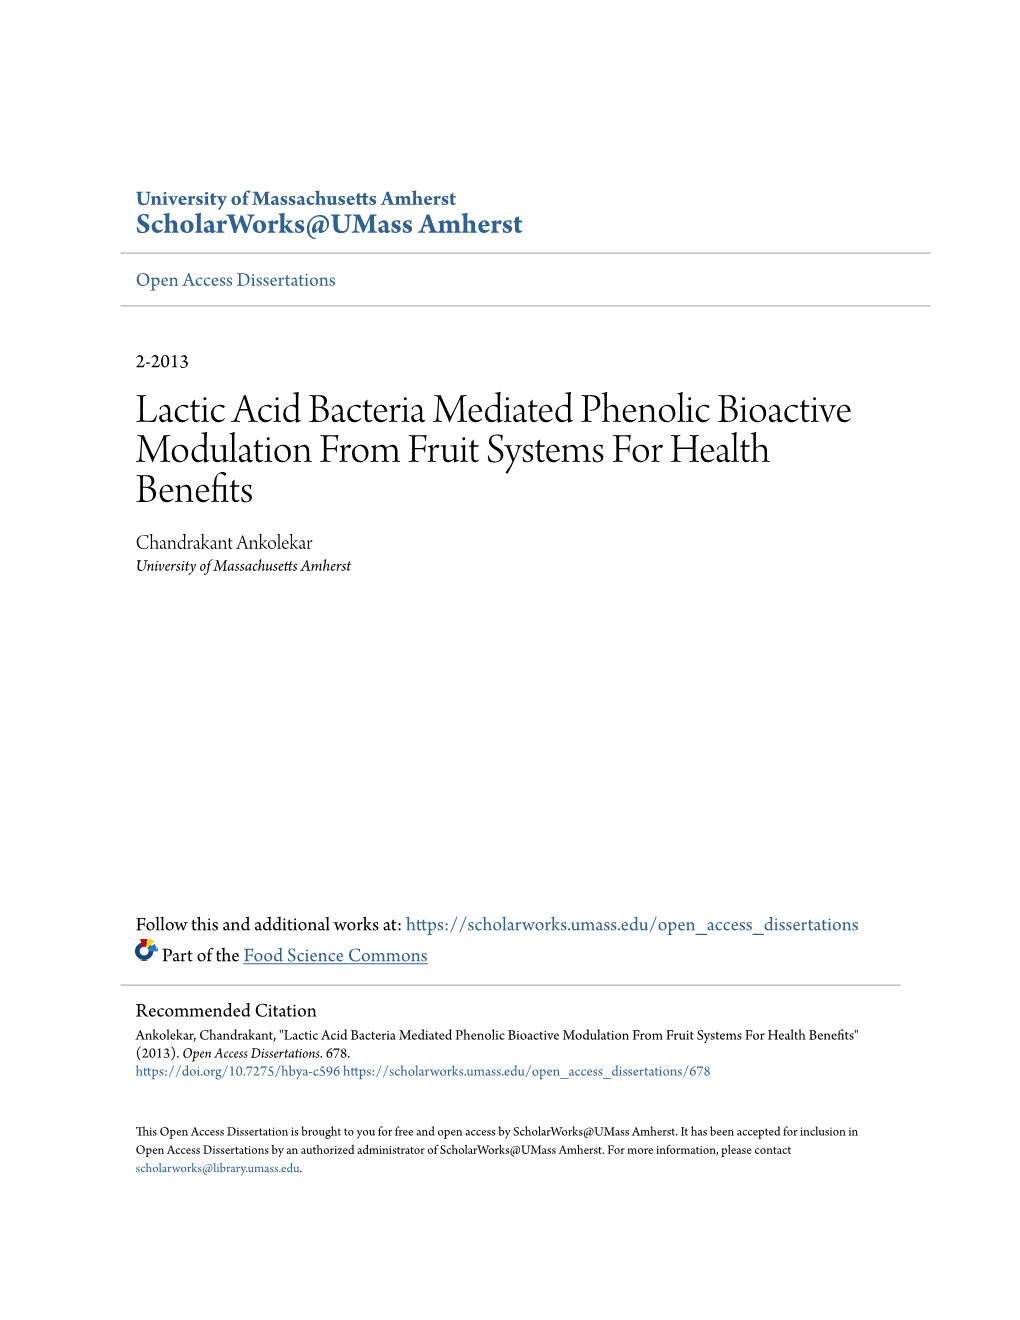 Lactic Acid Bacteria Mediated Phenolic Bioactive Modulation from Fruit Systems for Health Benefits Chandrakant Ankolekar University of Massachusetts Amherst